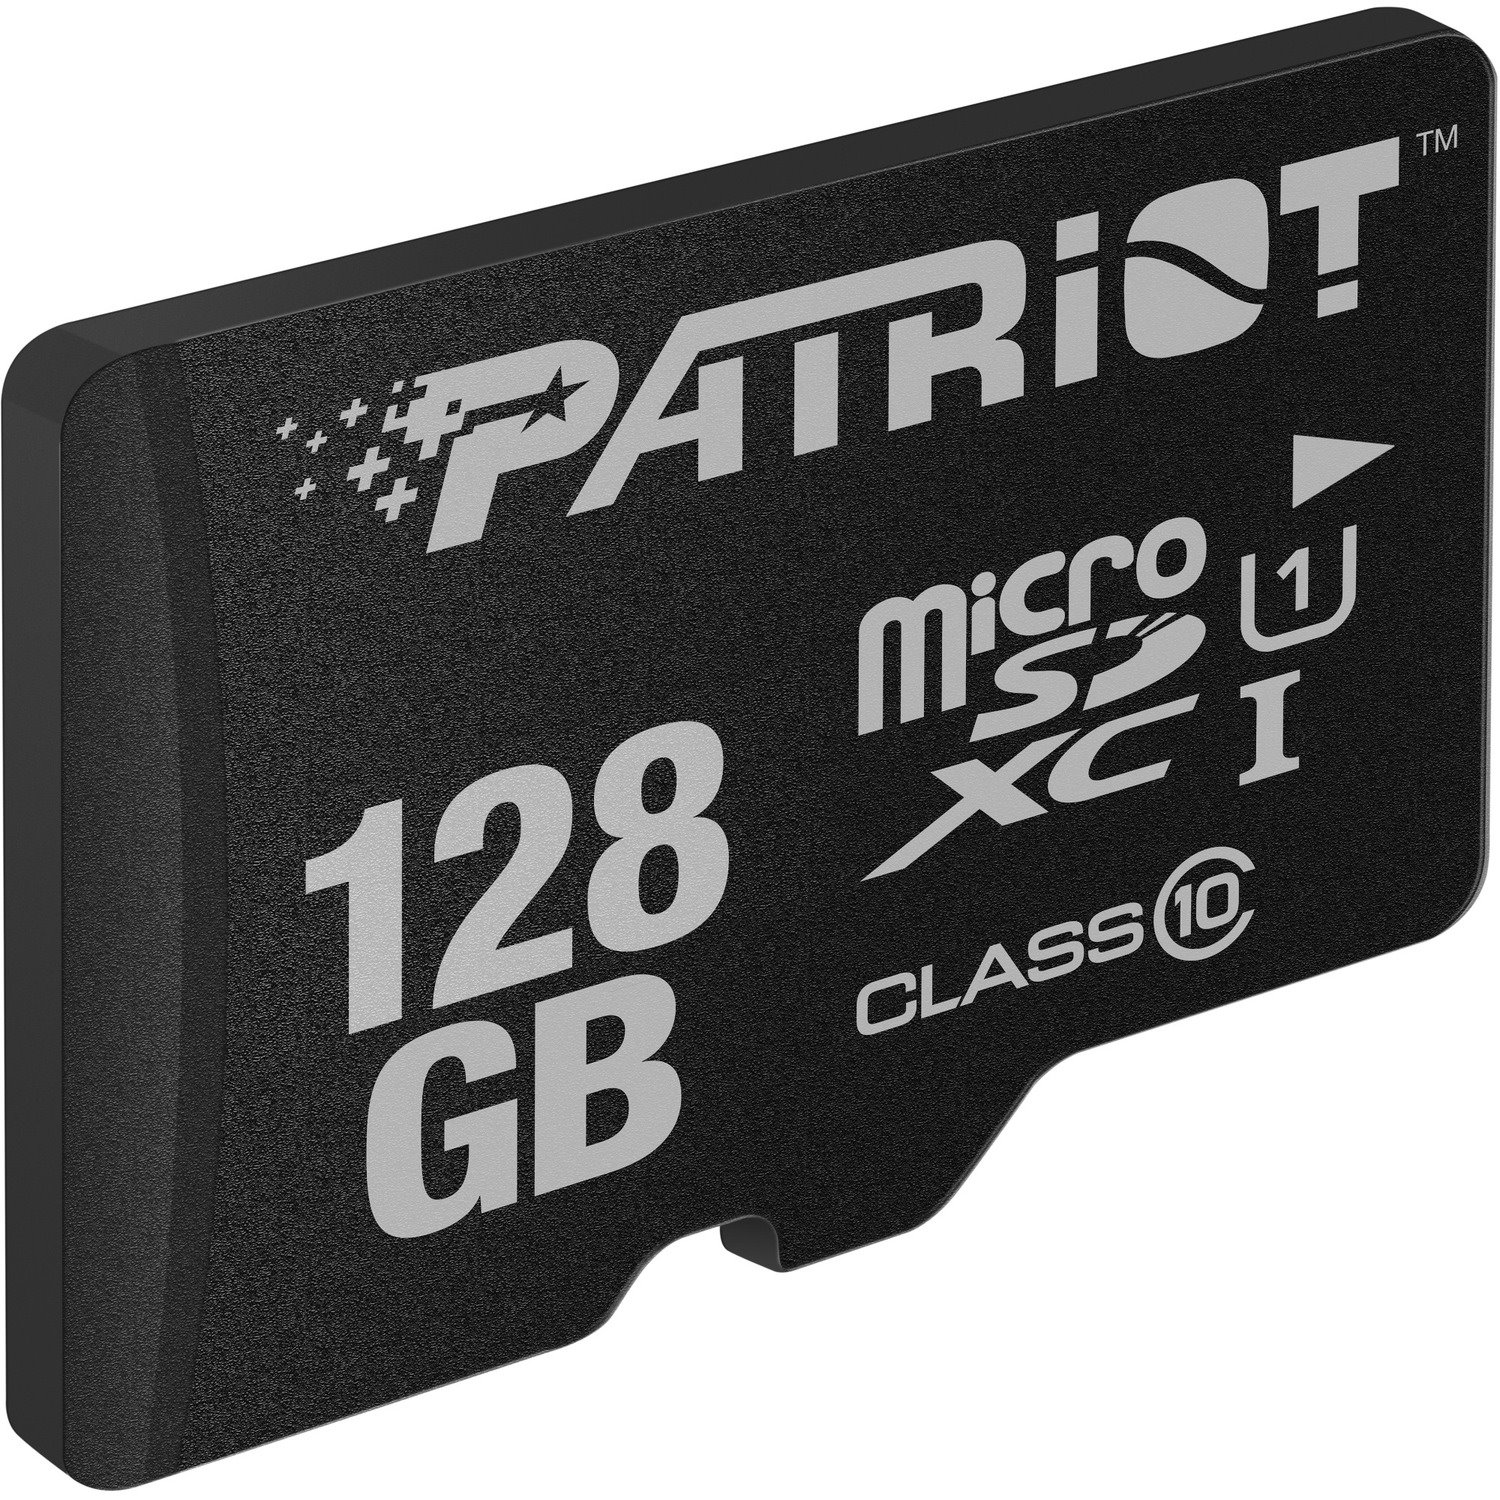 Patriot Memory 128 GB Class 10/UHS-I (U1) microSDXC - 1 Pack